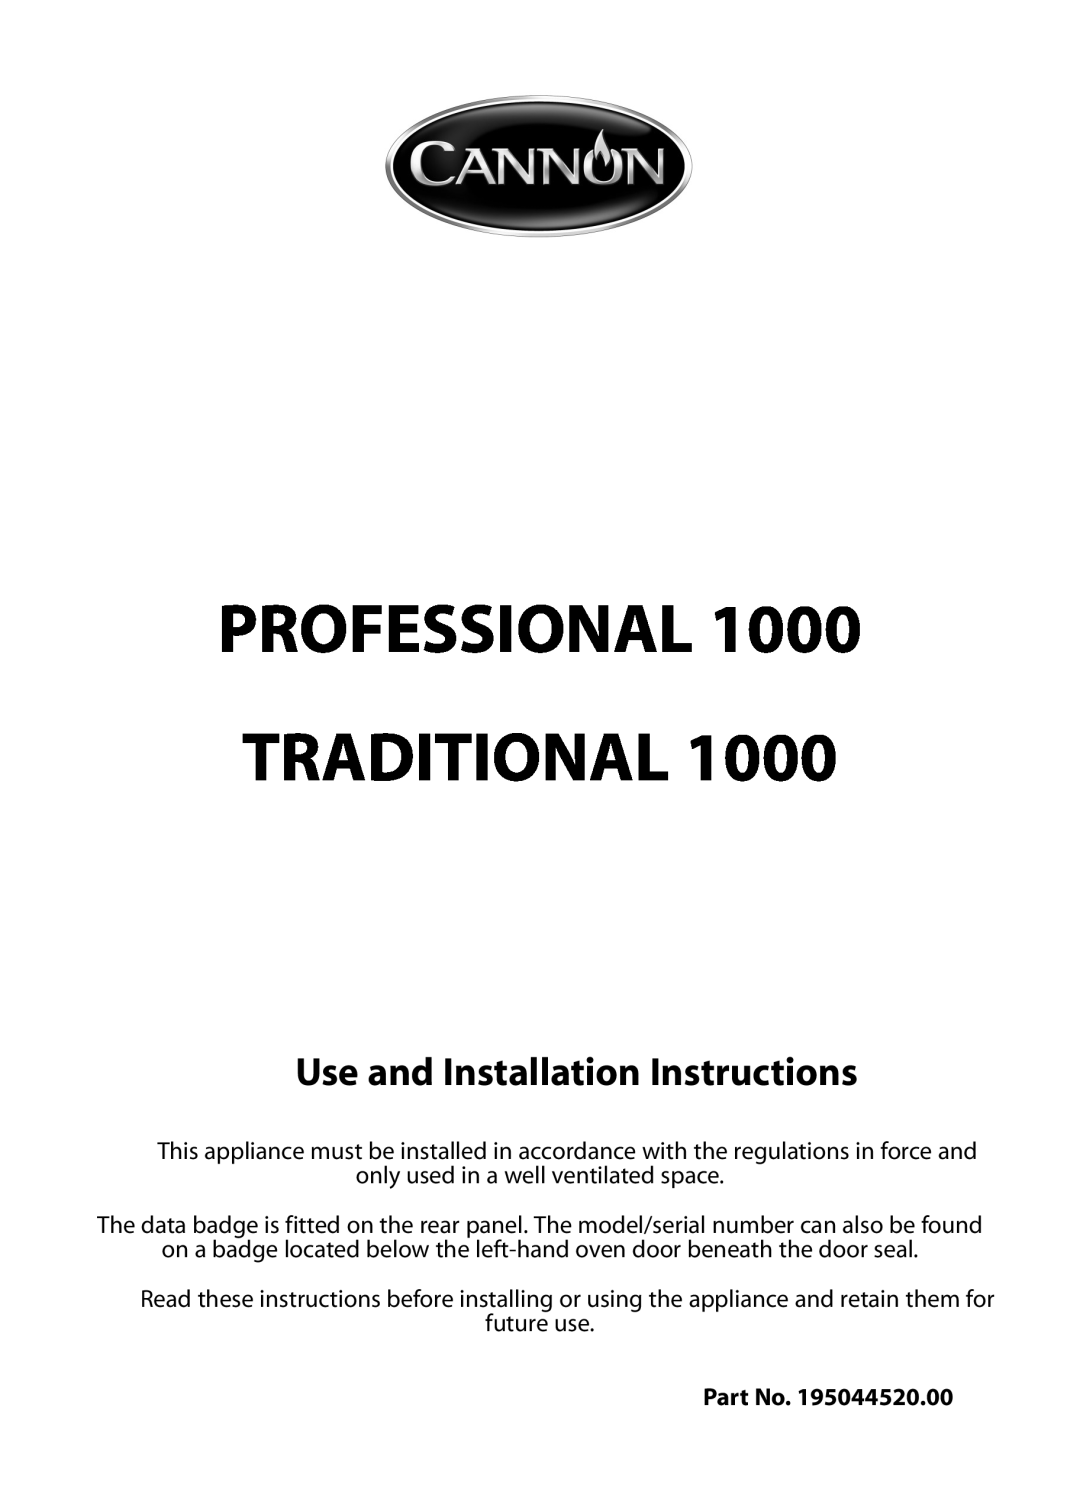 Cannon Professional 1000, 10455G installation instructions Use and Installation Instructions, Professional Traditional 